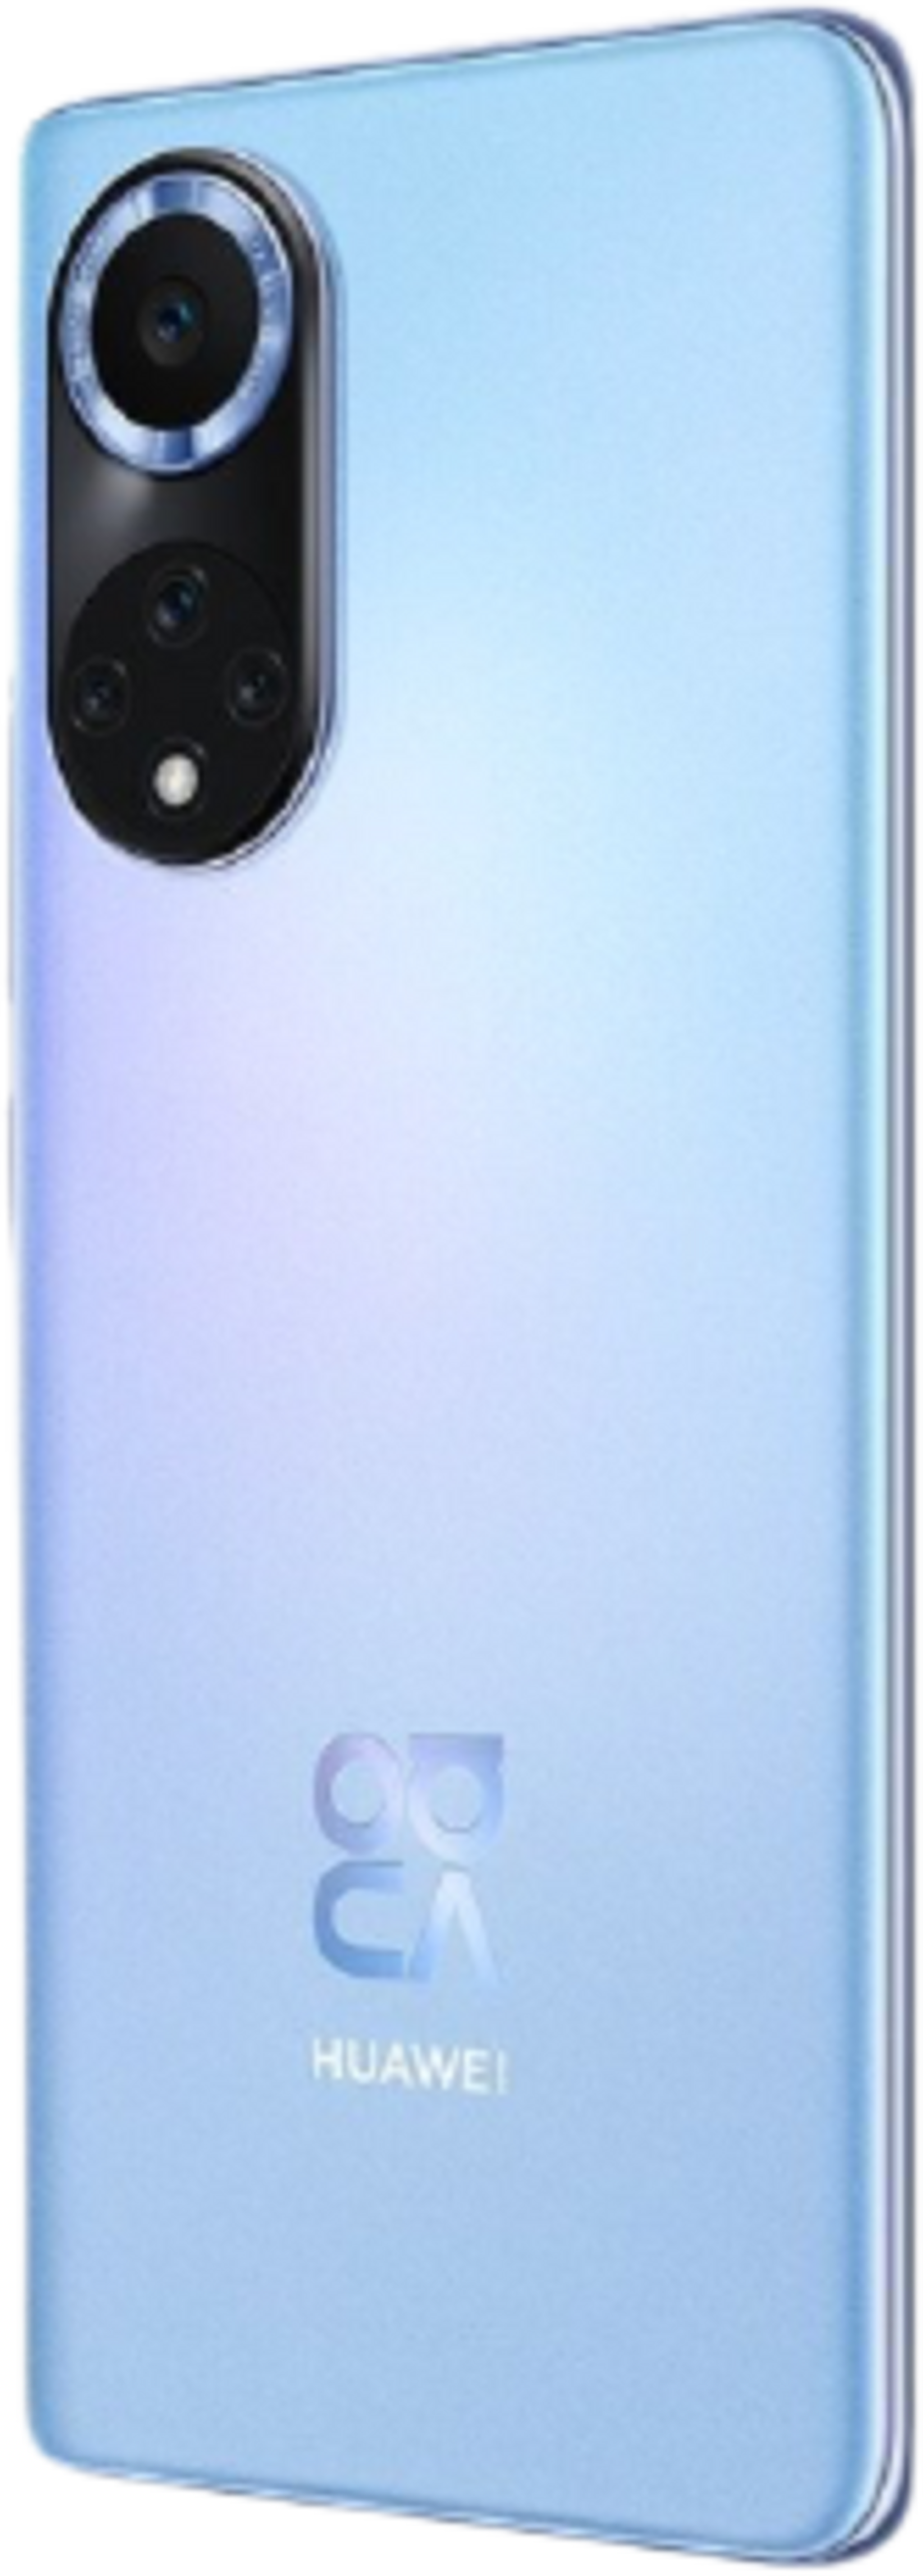 هاتف هواوي نوفا 9 بسعة 128 جيجابايت - أزرق